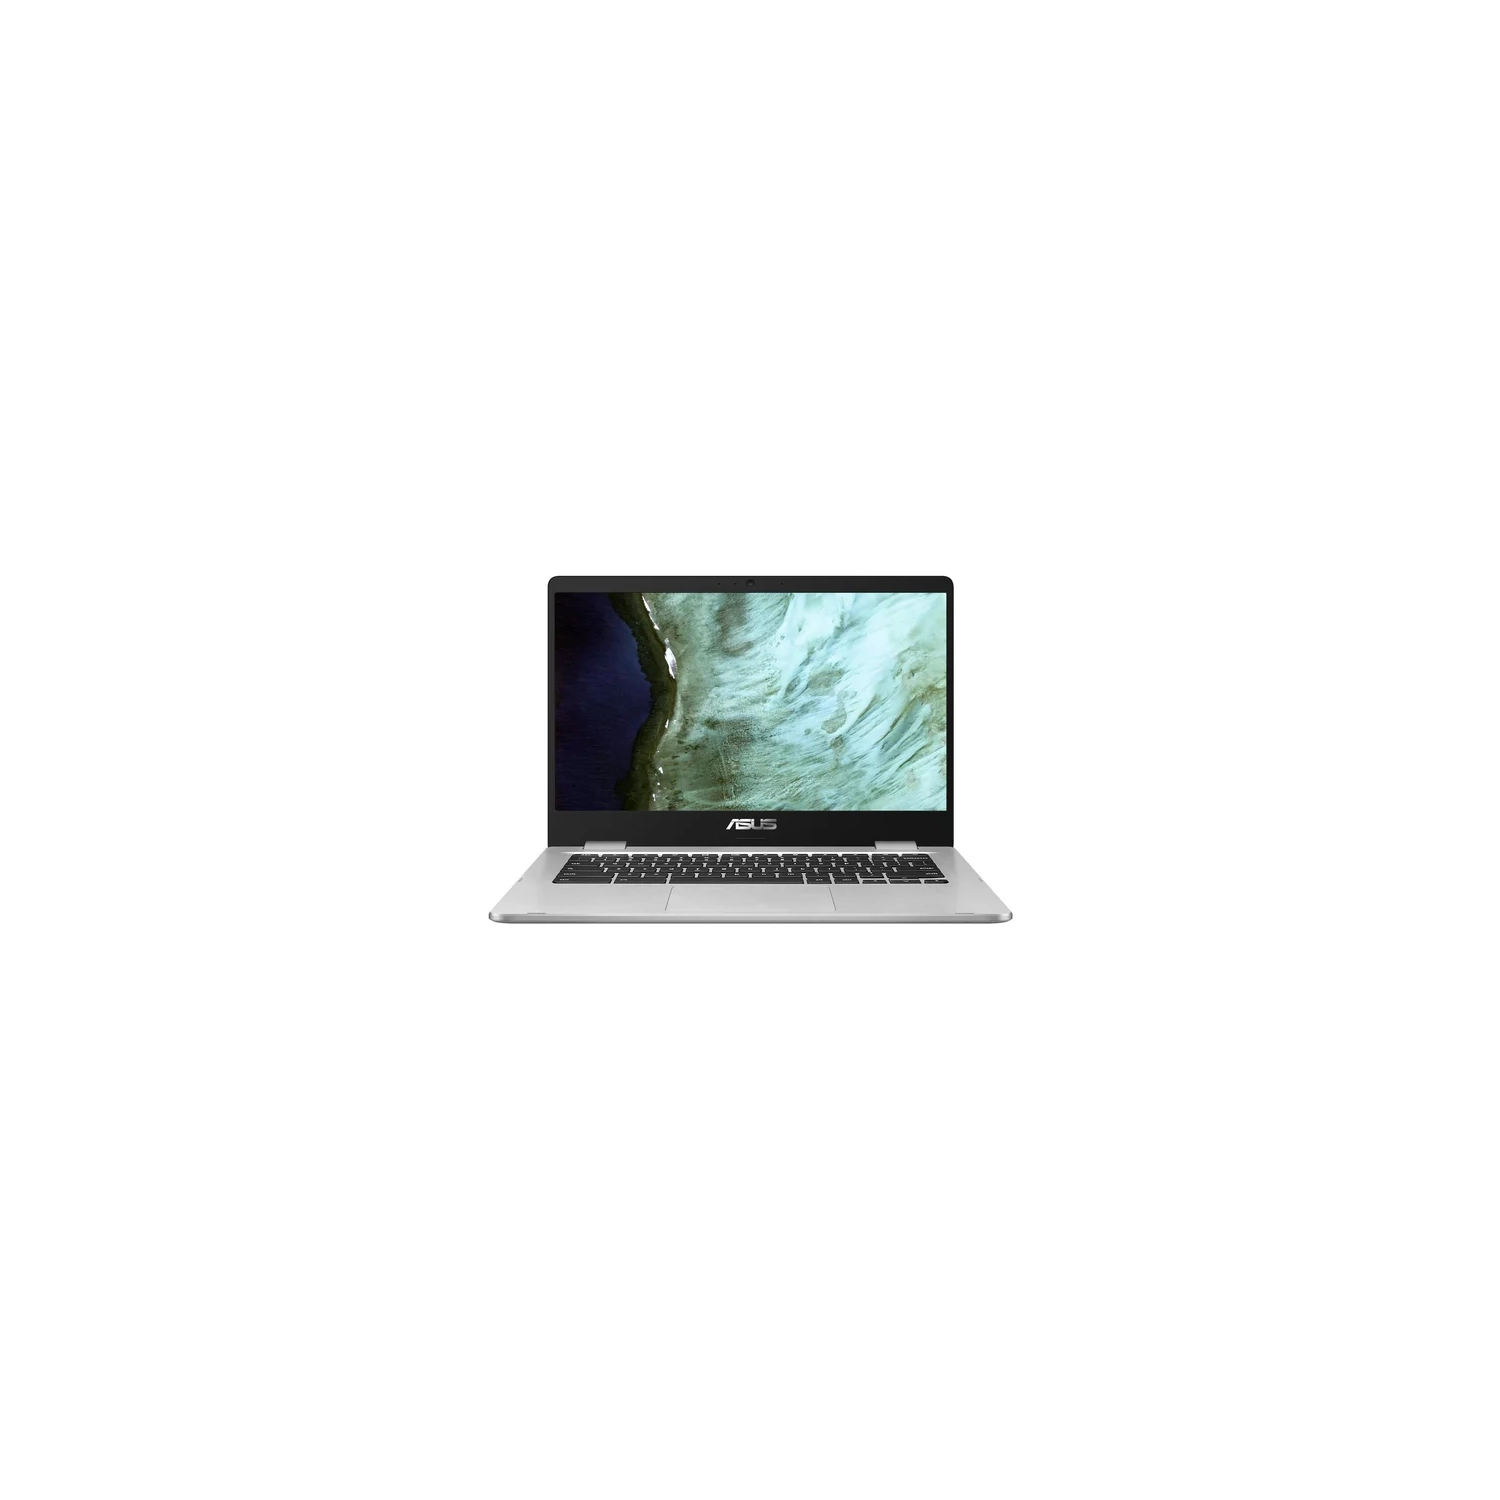 ASUS Chromebook 14" Laptop (Celeron N3350, 4GB RAM, 64GB eMMC, Chrome OS) - C423NA-WB04 (Factory Refurbished)